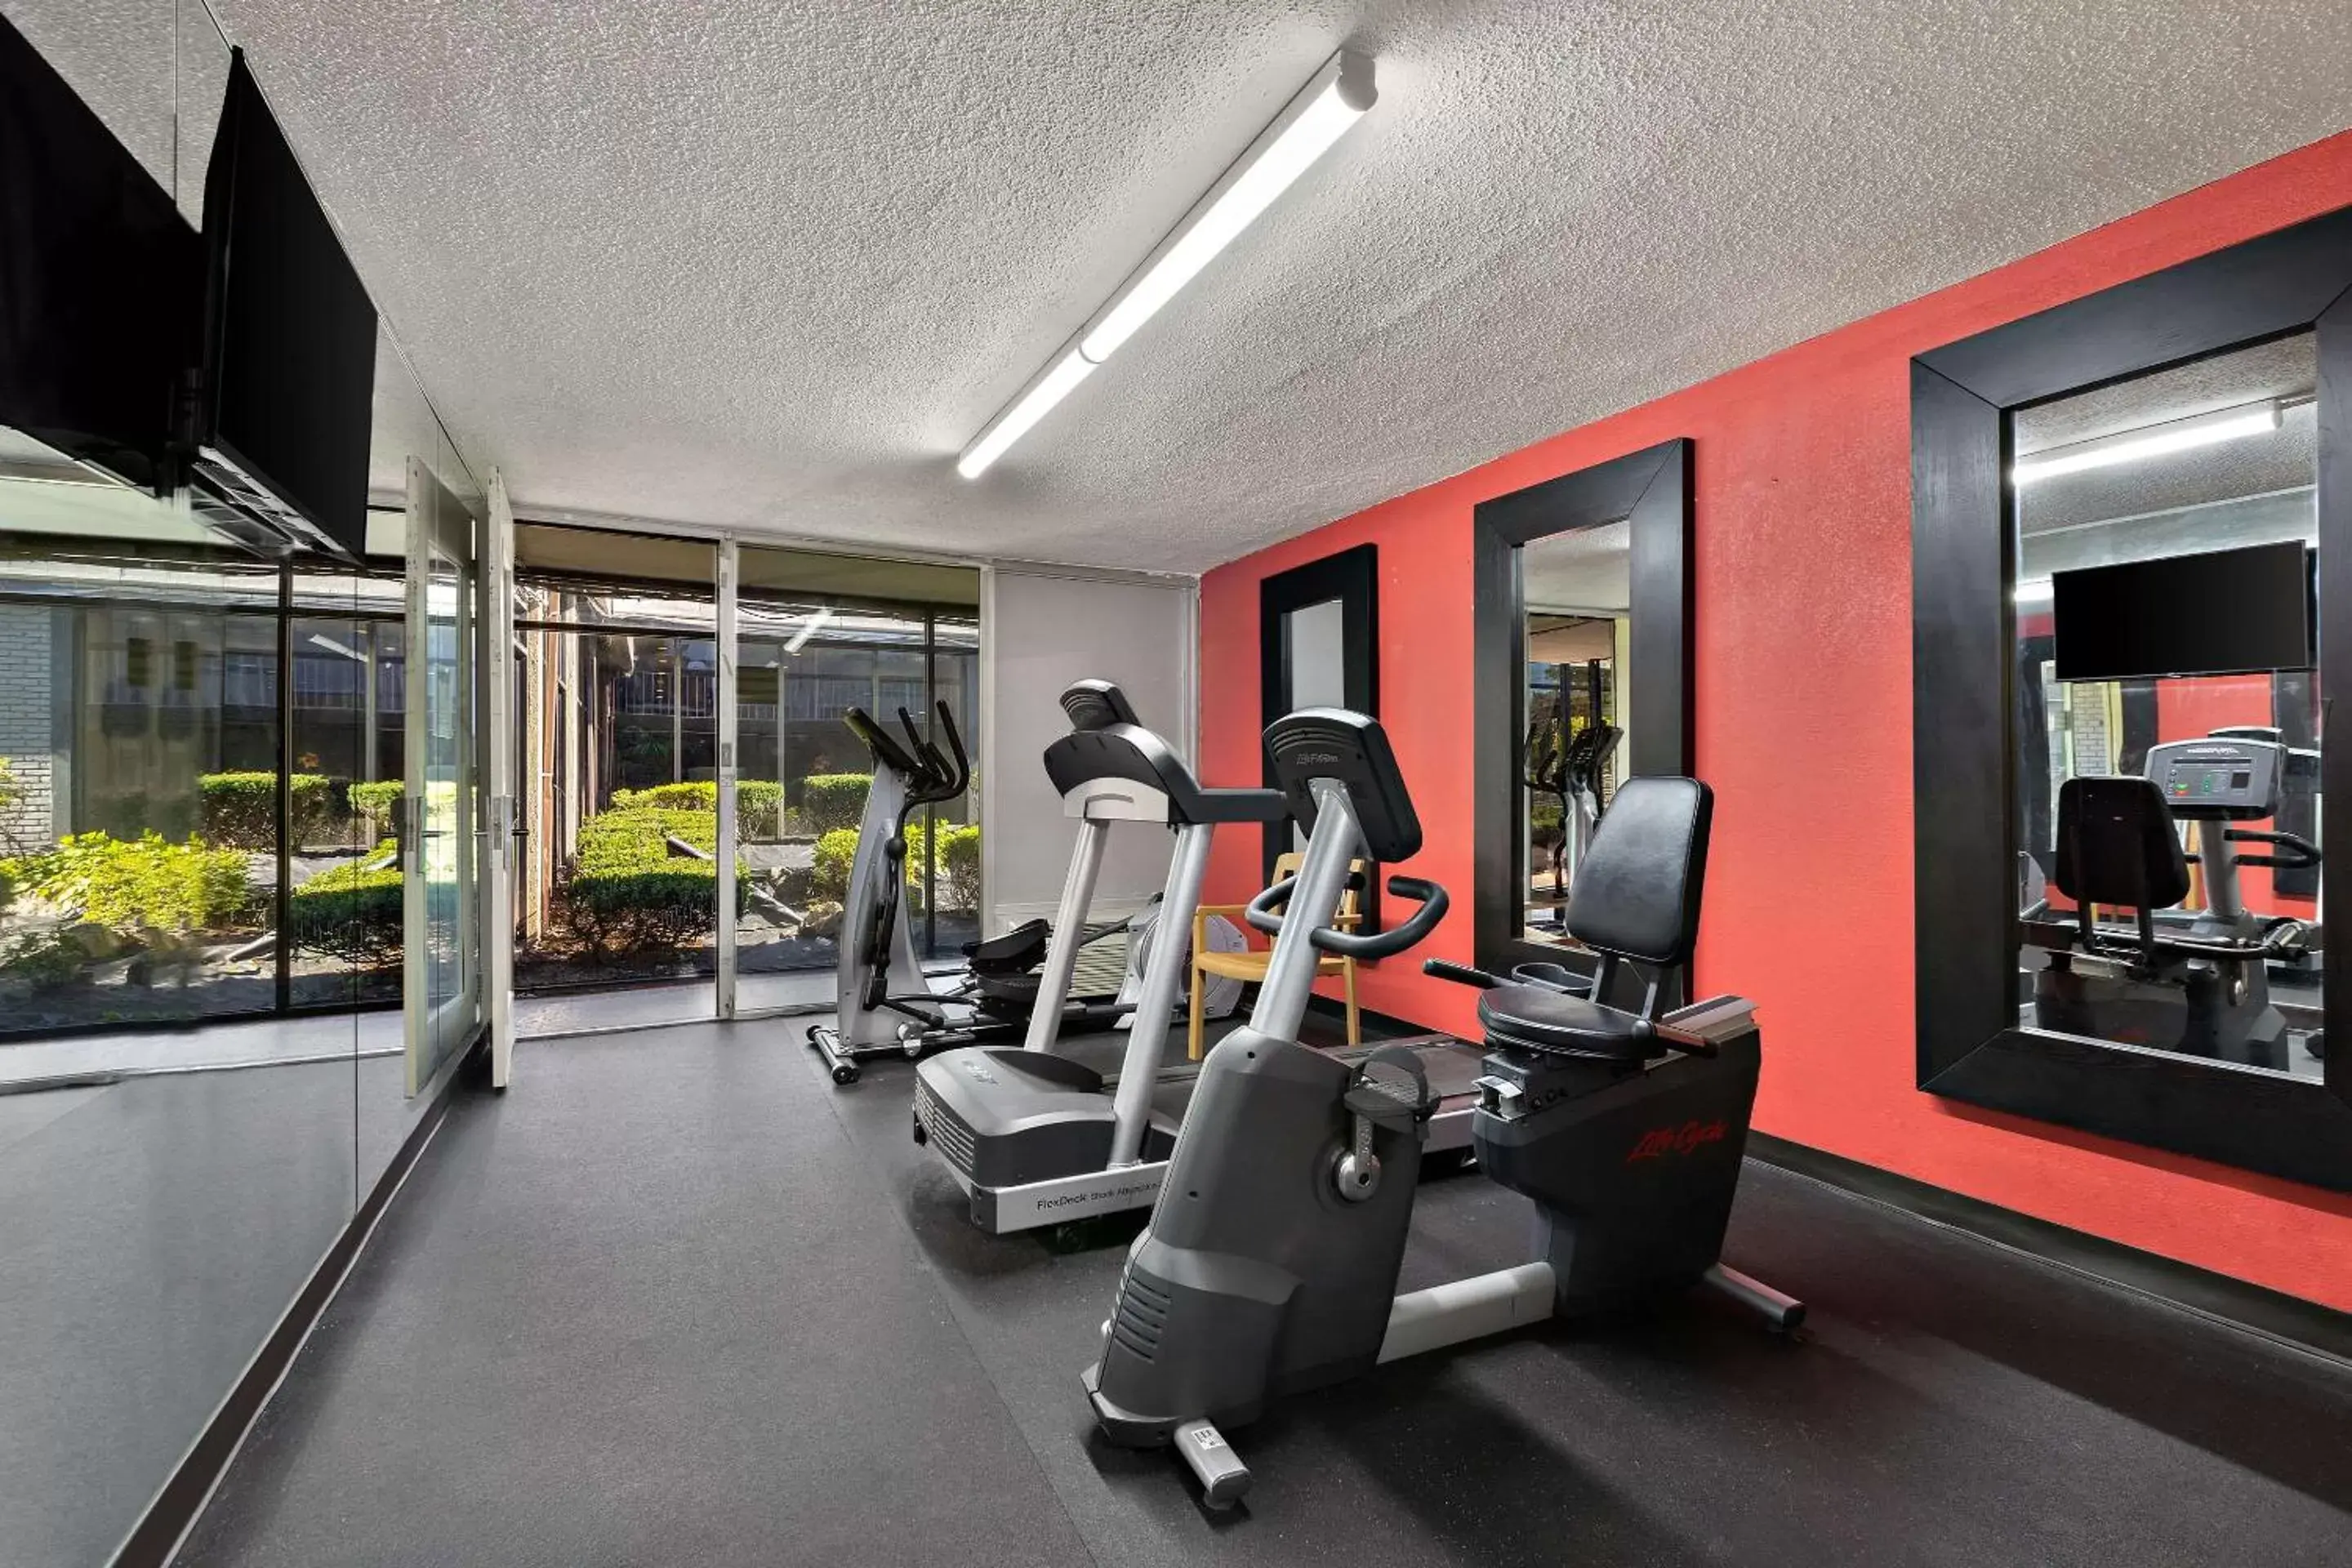 Fitness centre/facilities, Fitness Center/Facilities in Quality Inn Wayne - Fairfield Area